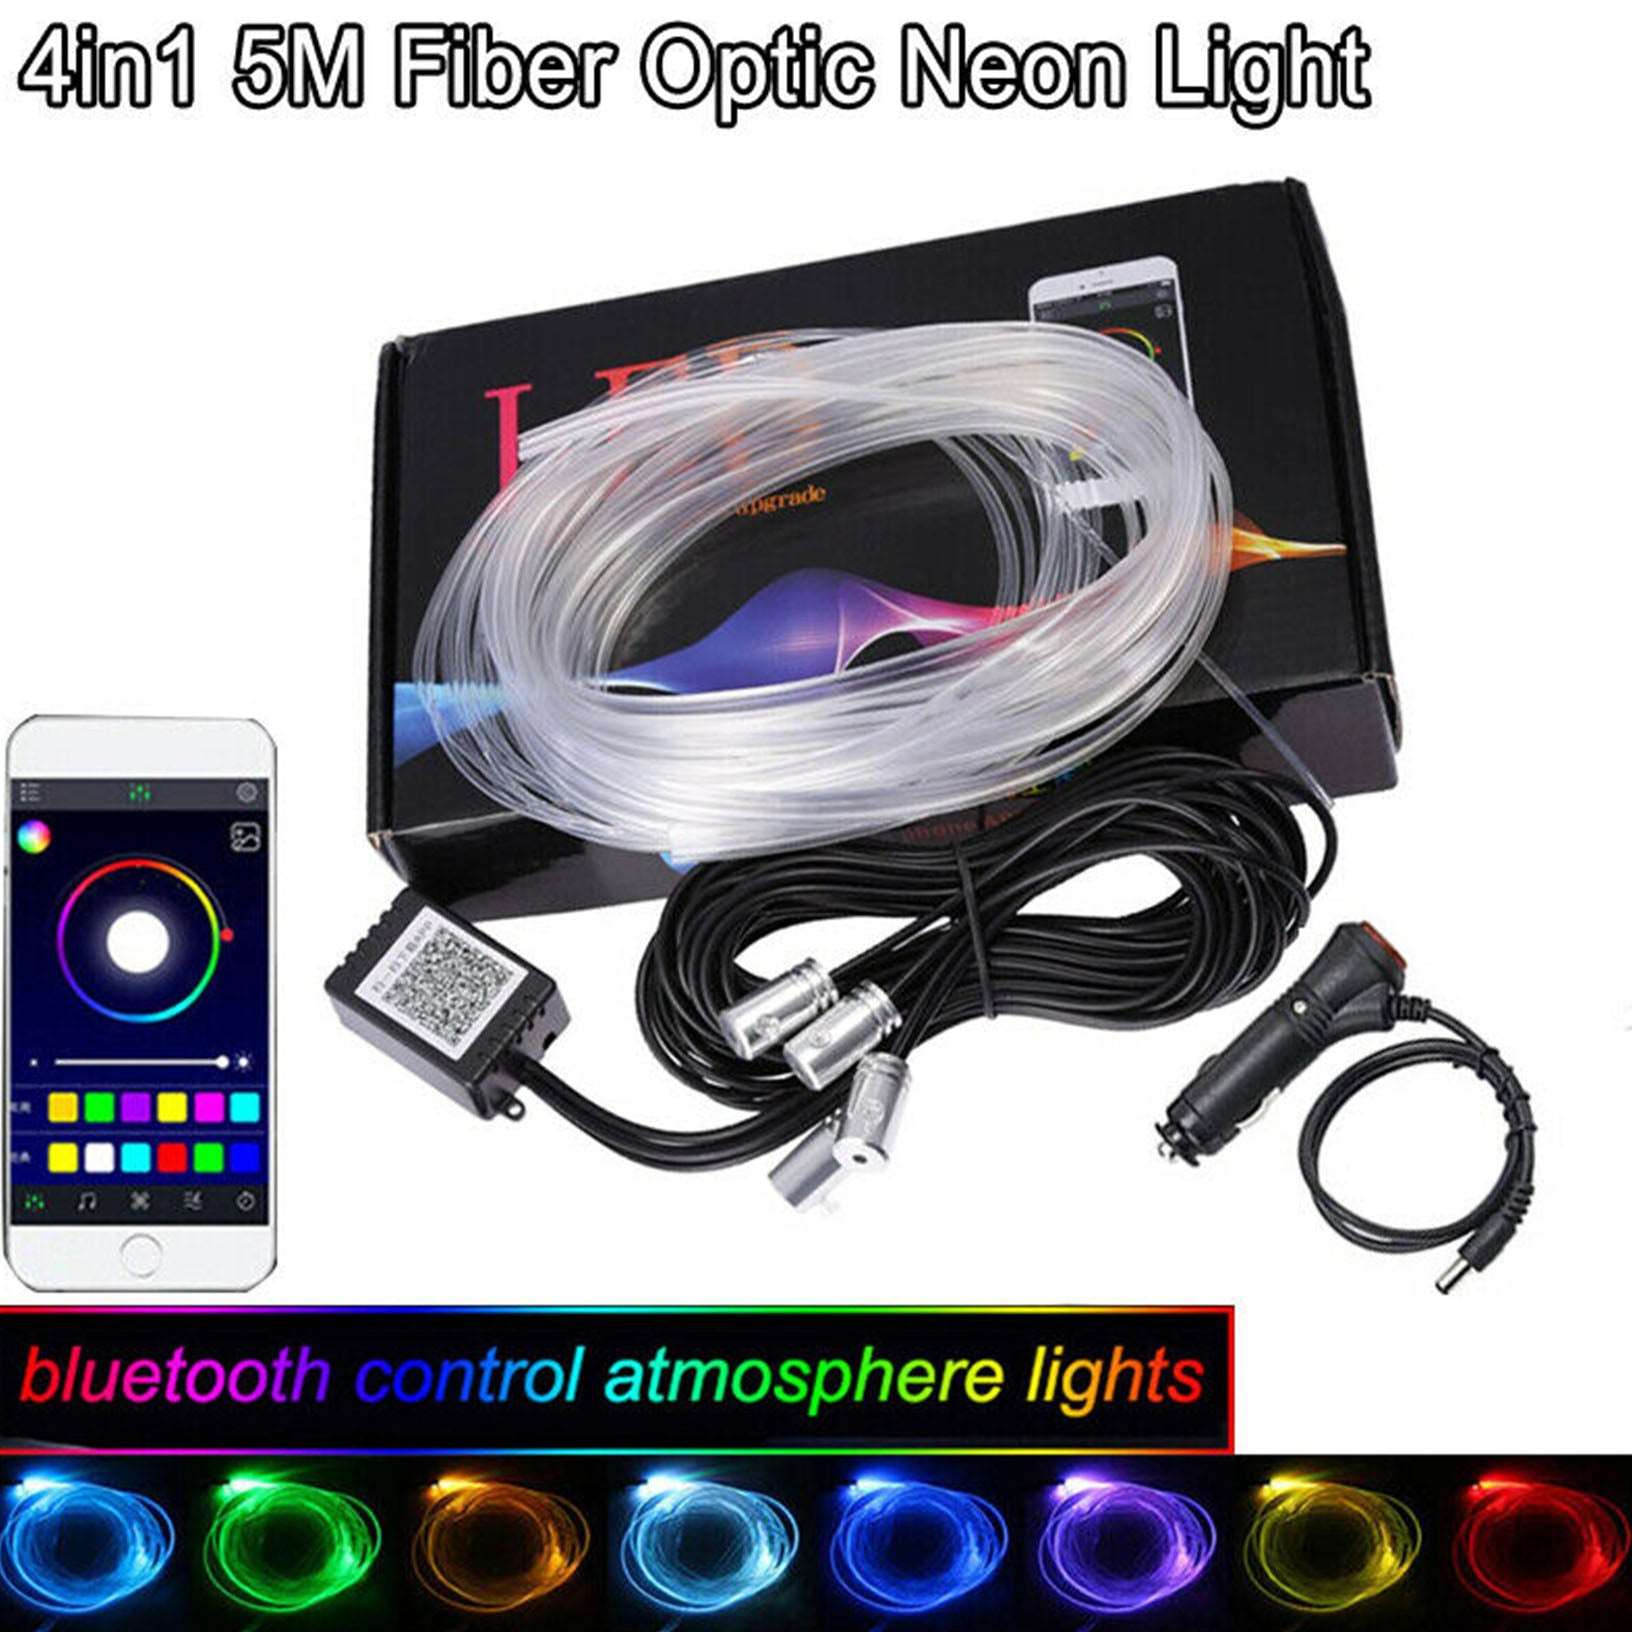 Optic Neon Light 4in1 5 metre App controlled